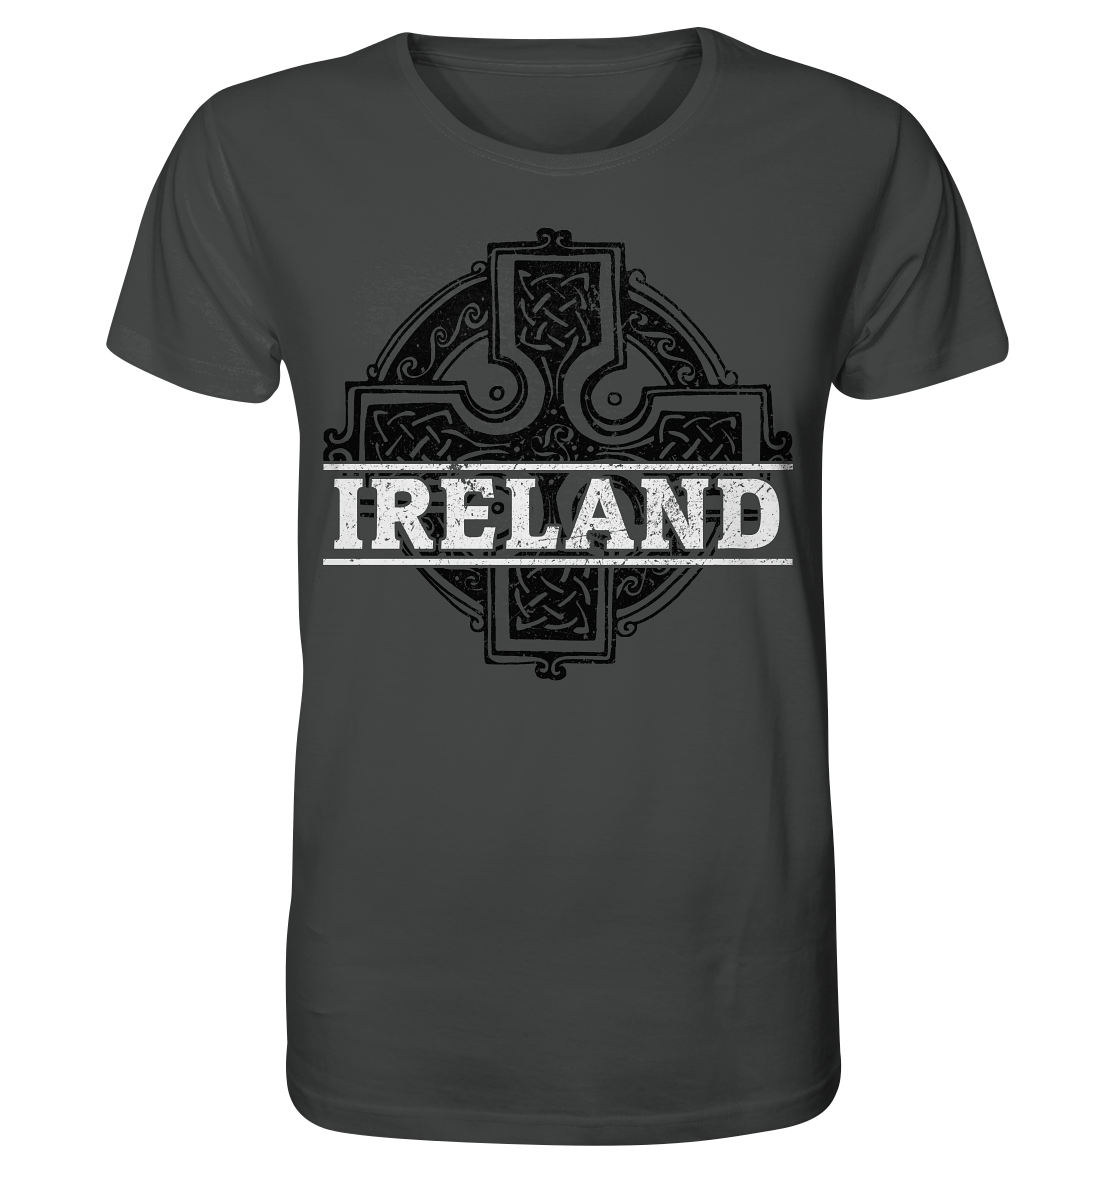 Ireland "Celtic Cross" - Organic Shirt